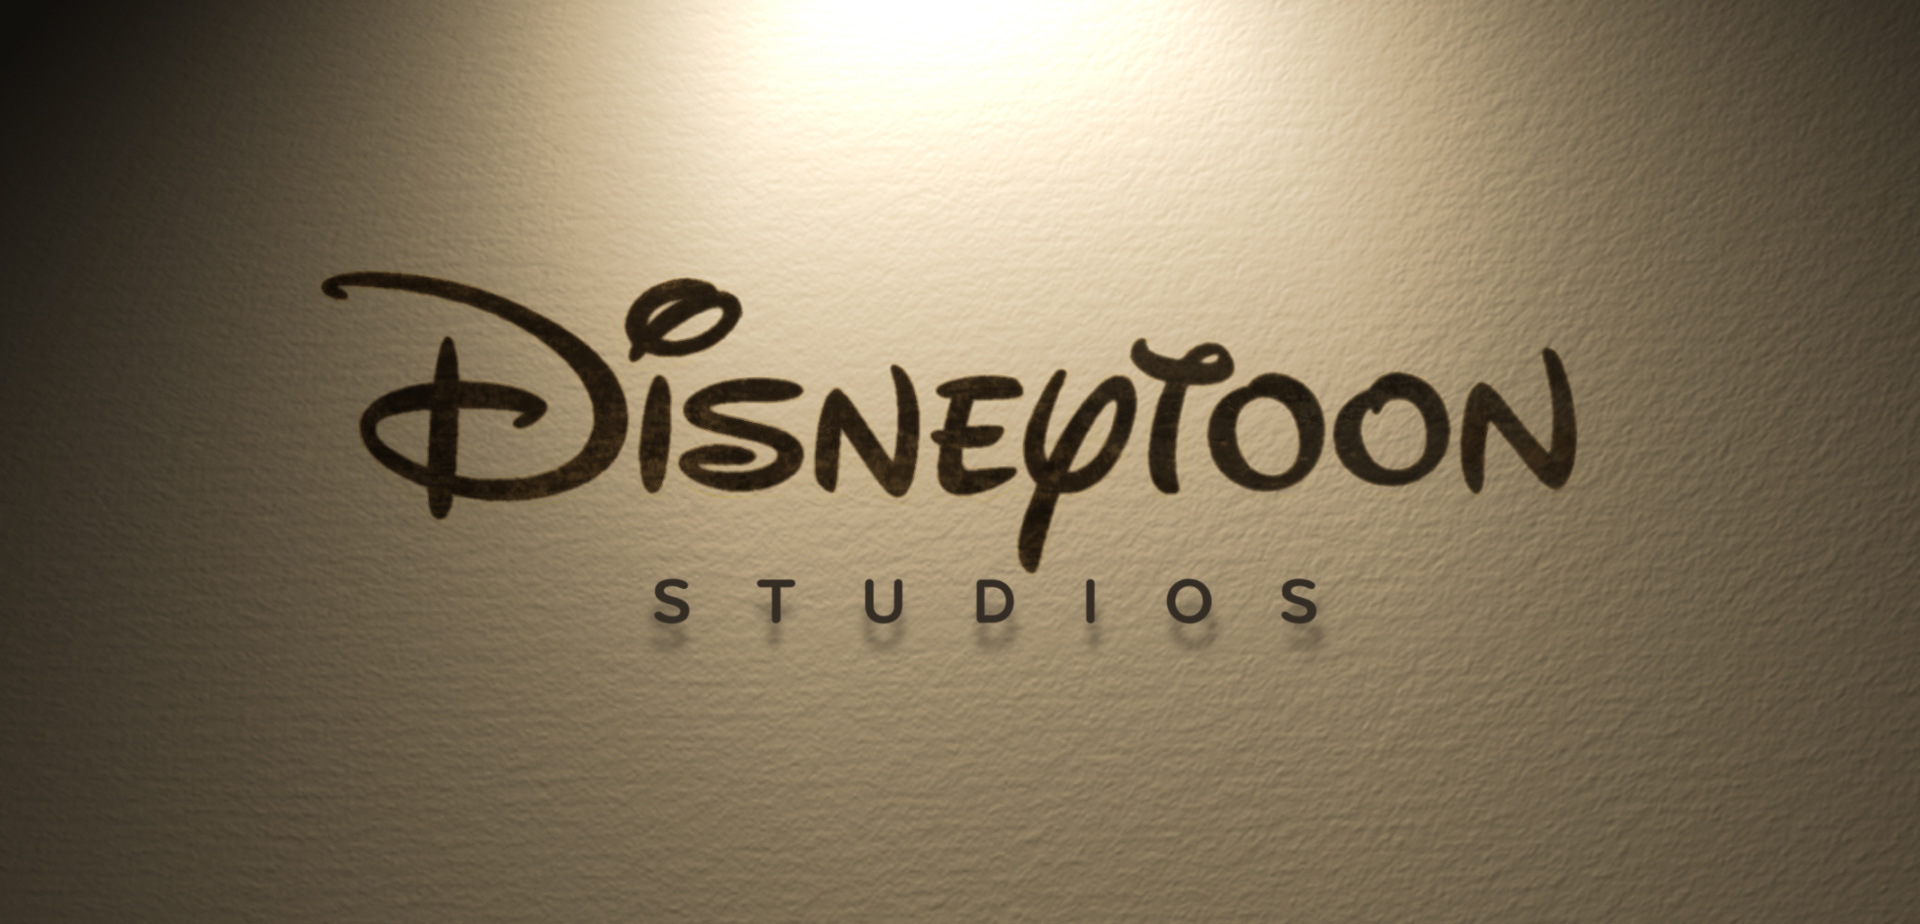 Disneytoon studio logo.